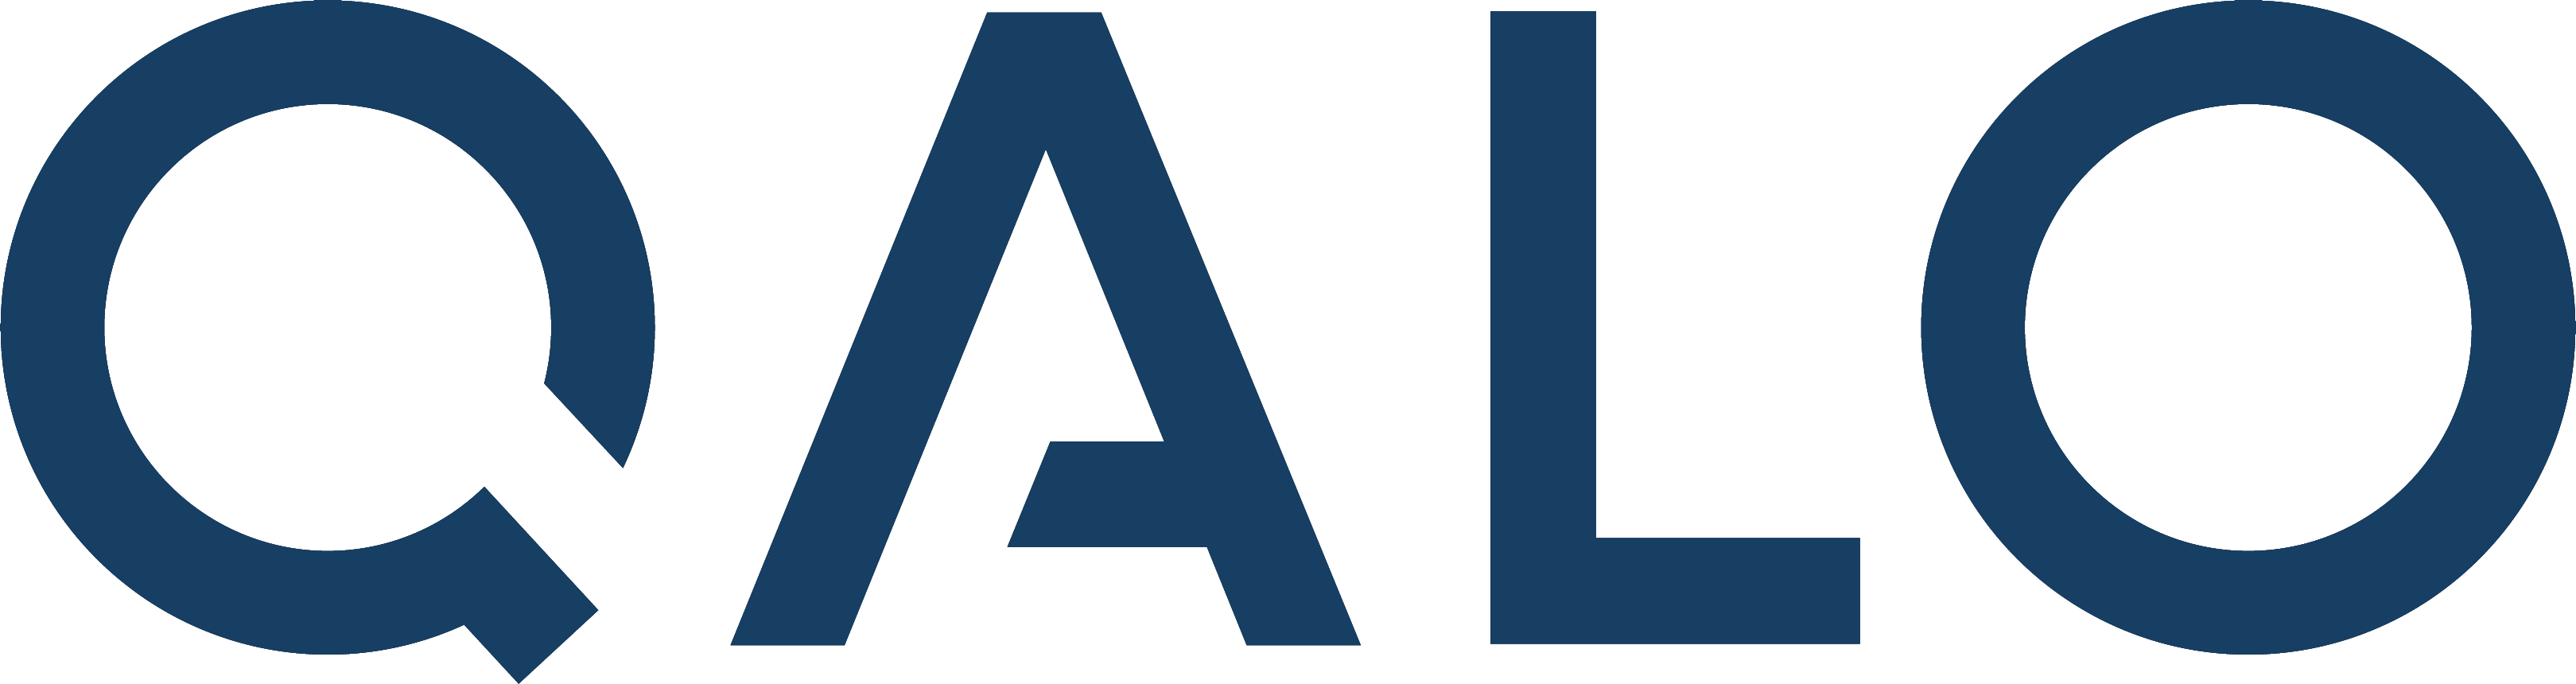 qalo-logo